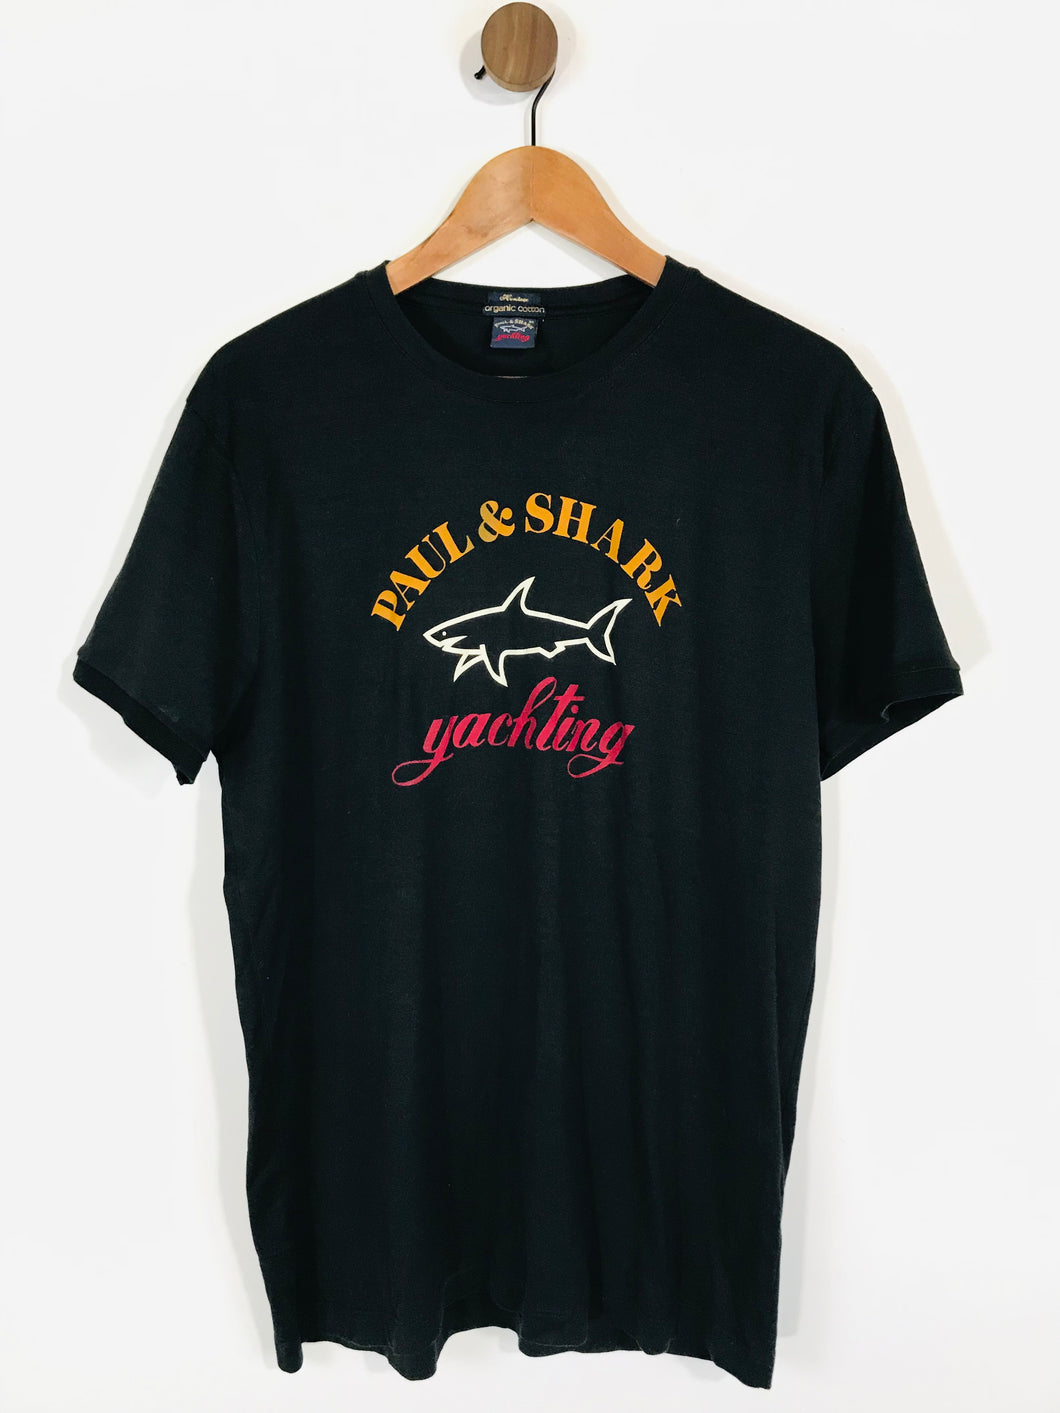 Paul & Shark Yachting Men's Cotton T-Shirt | XL | Black